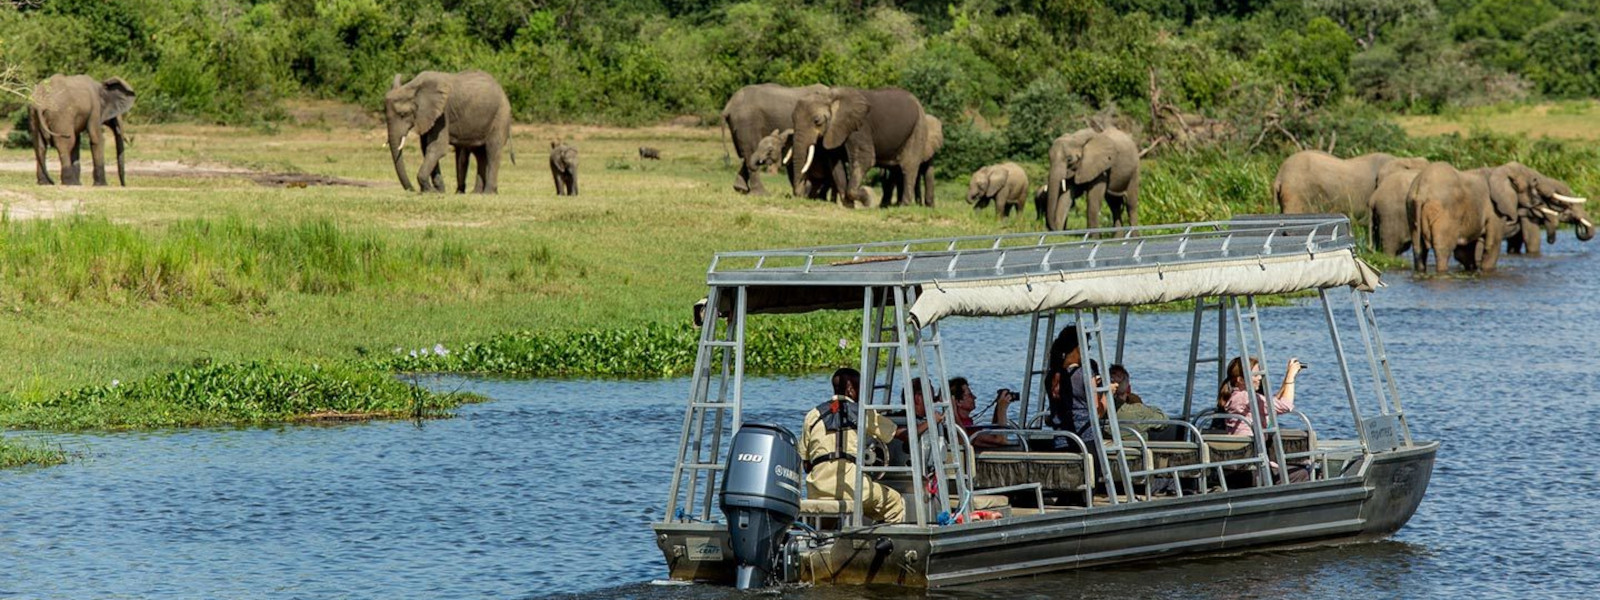 Africa Safari Destination